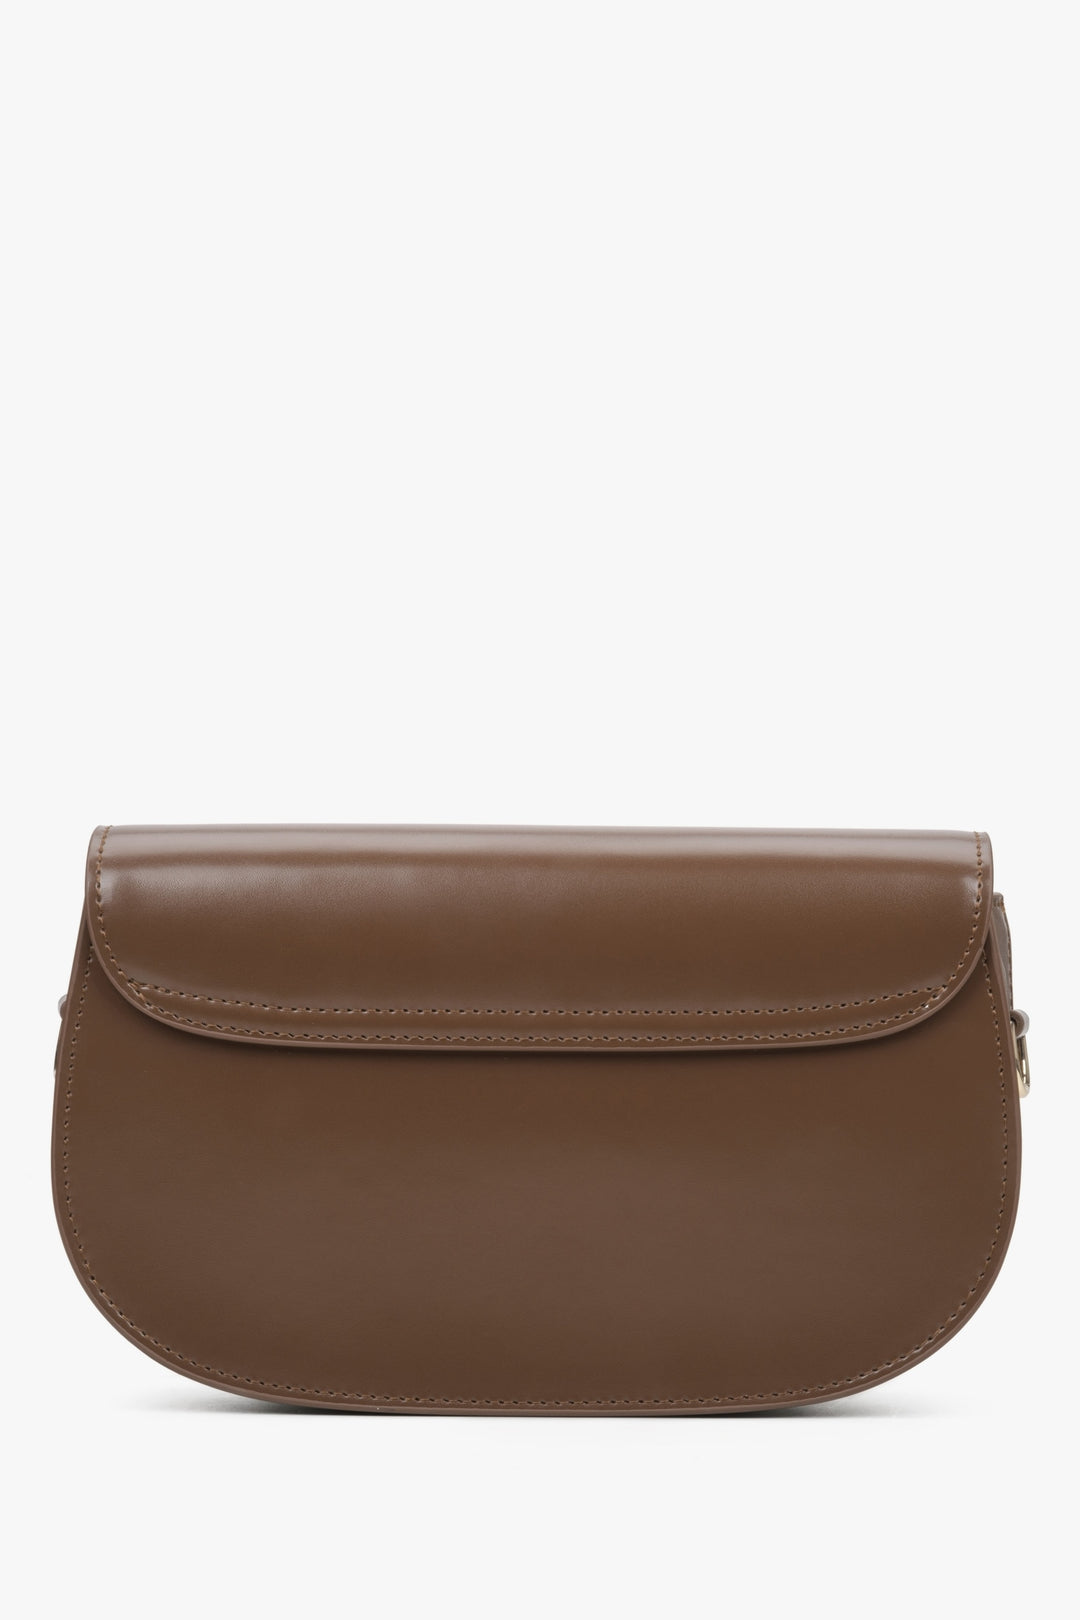 Estro women's leather bag with adjustable strap, brown colour.